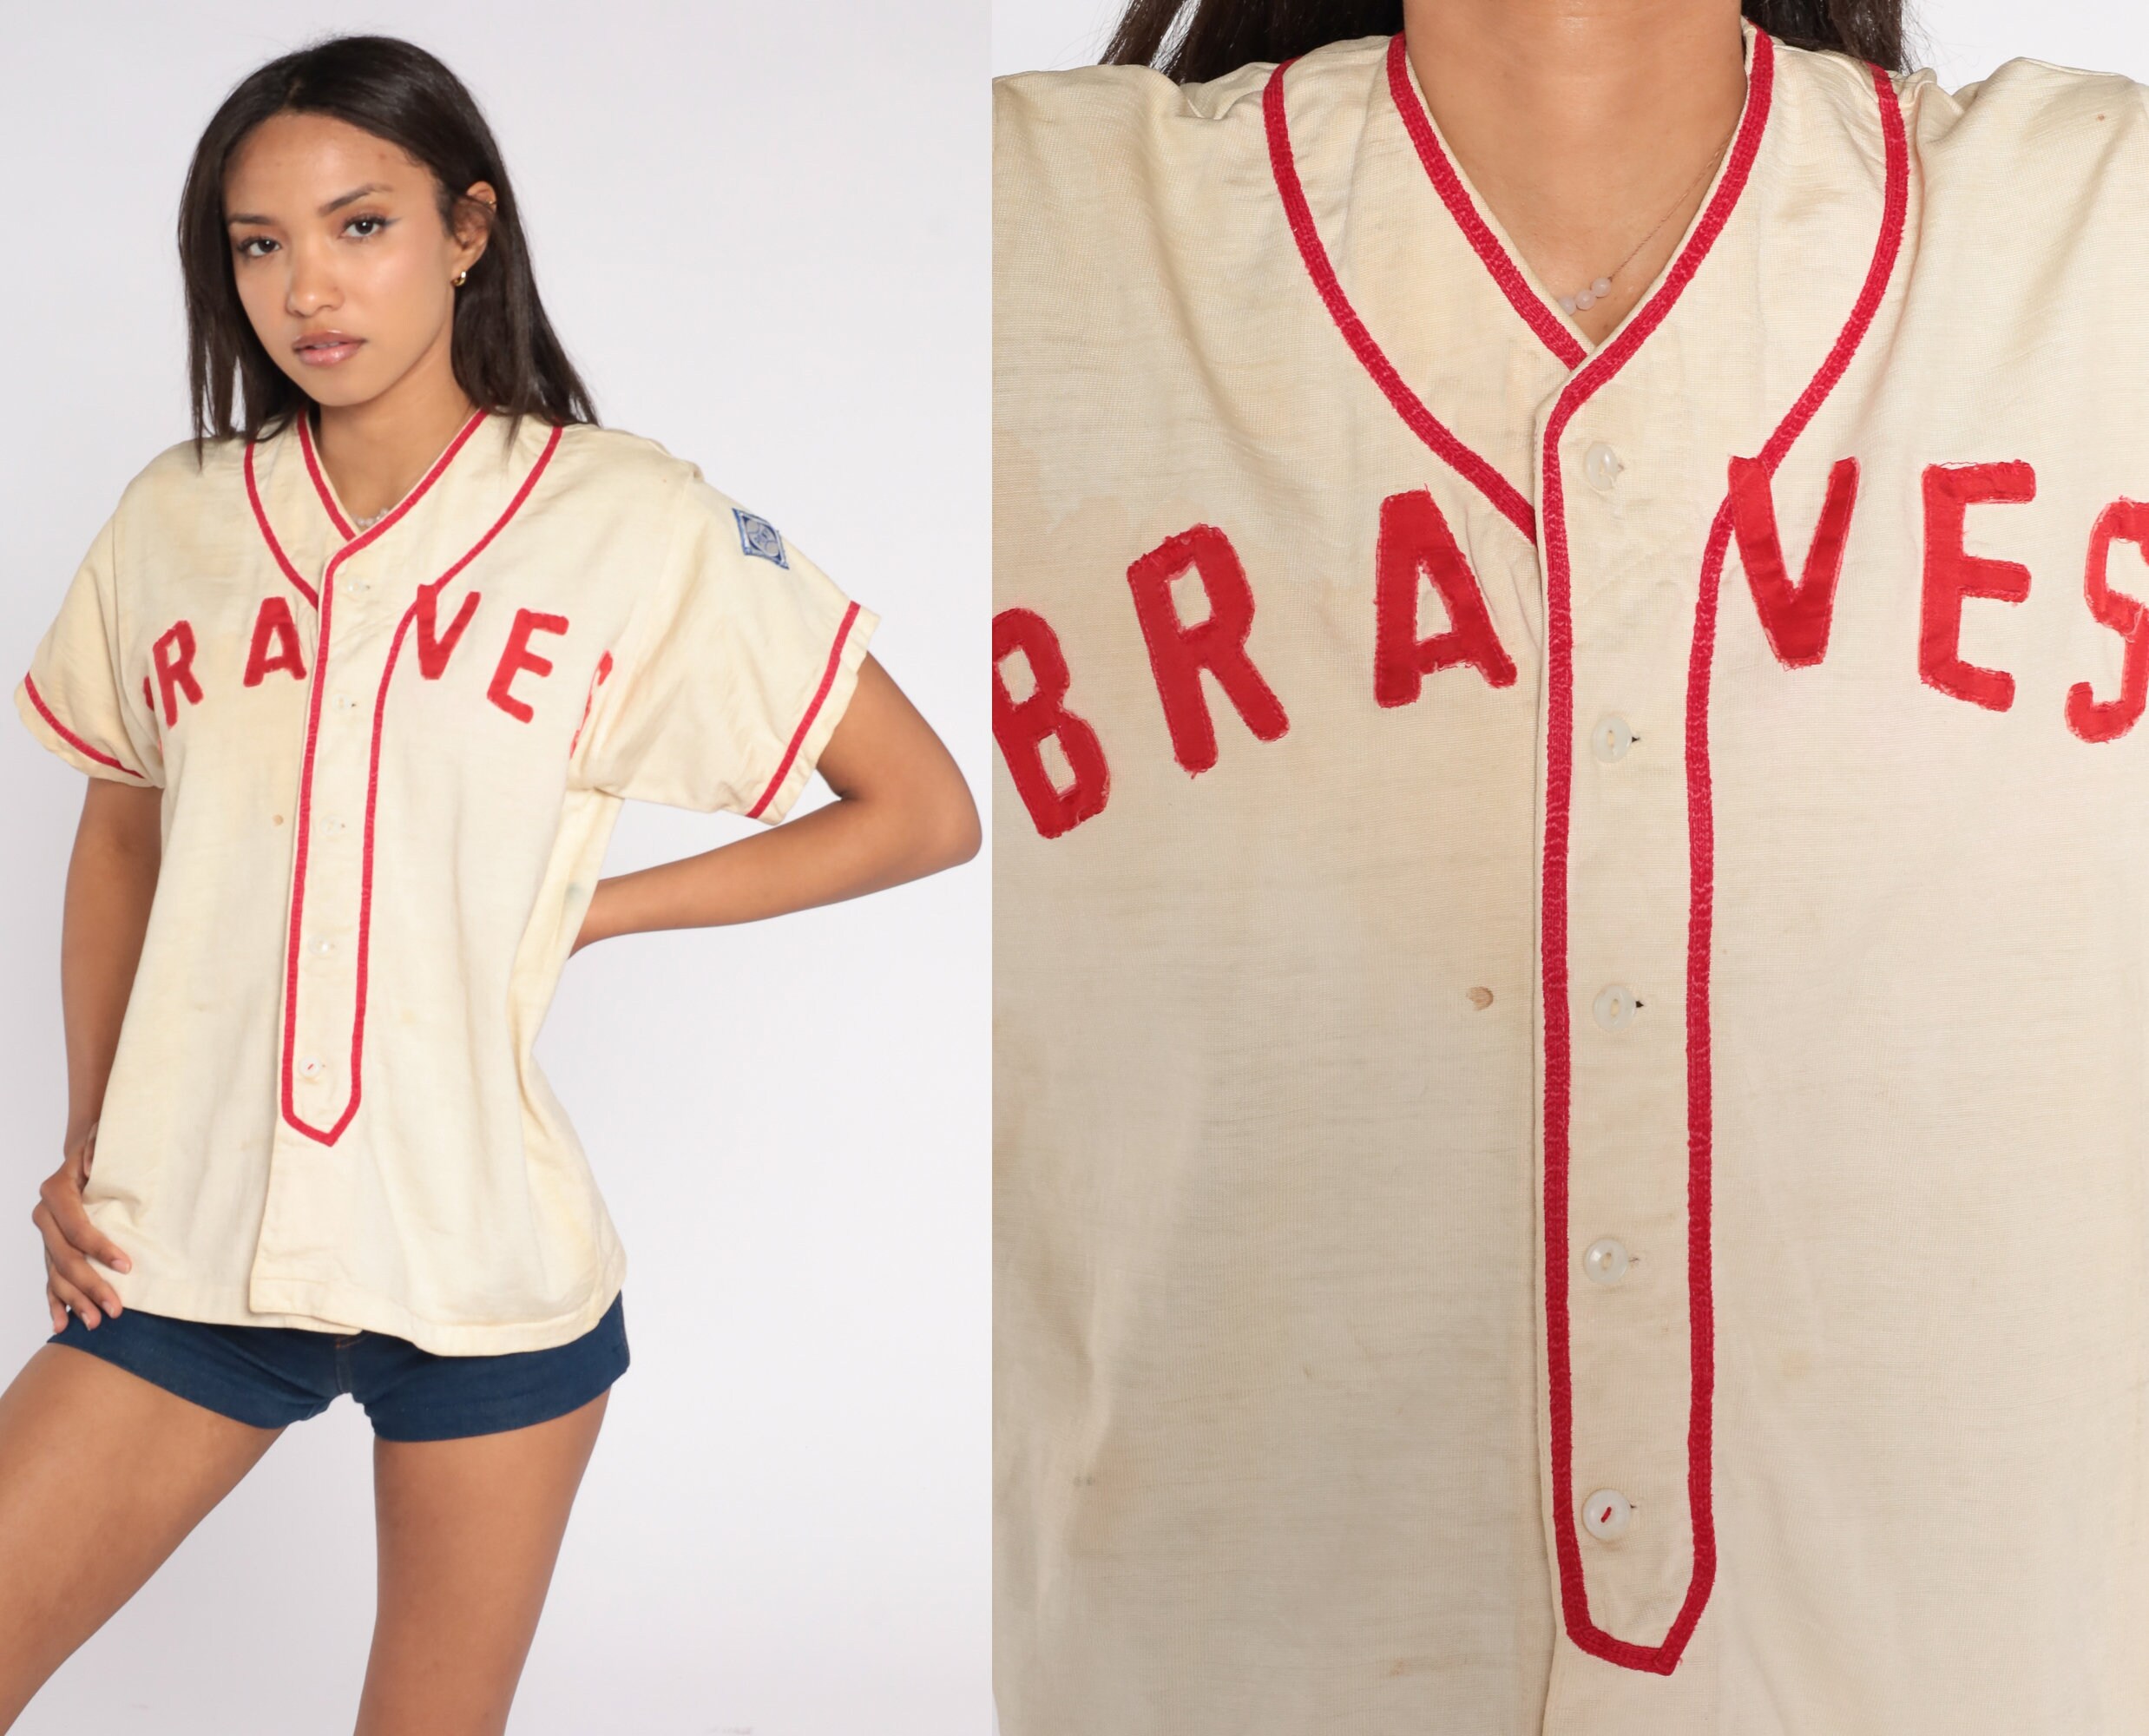 Mlb Atlanta Braves Embroidered Button Up Baseball Jersey